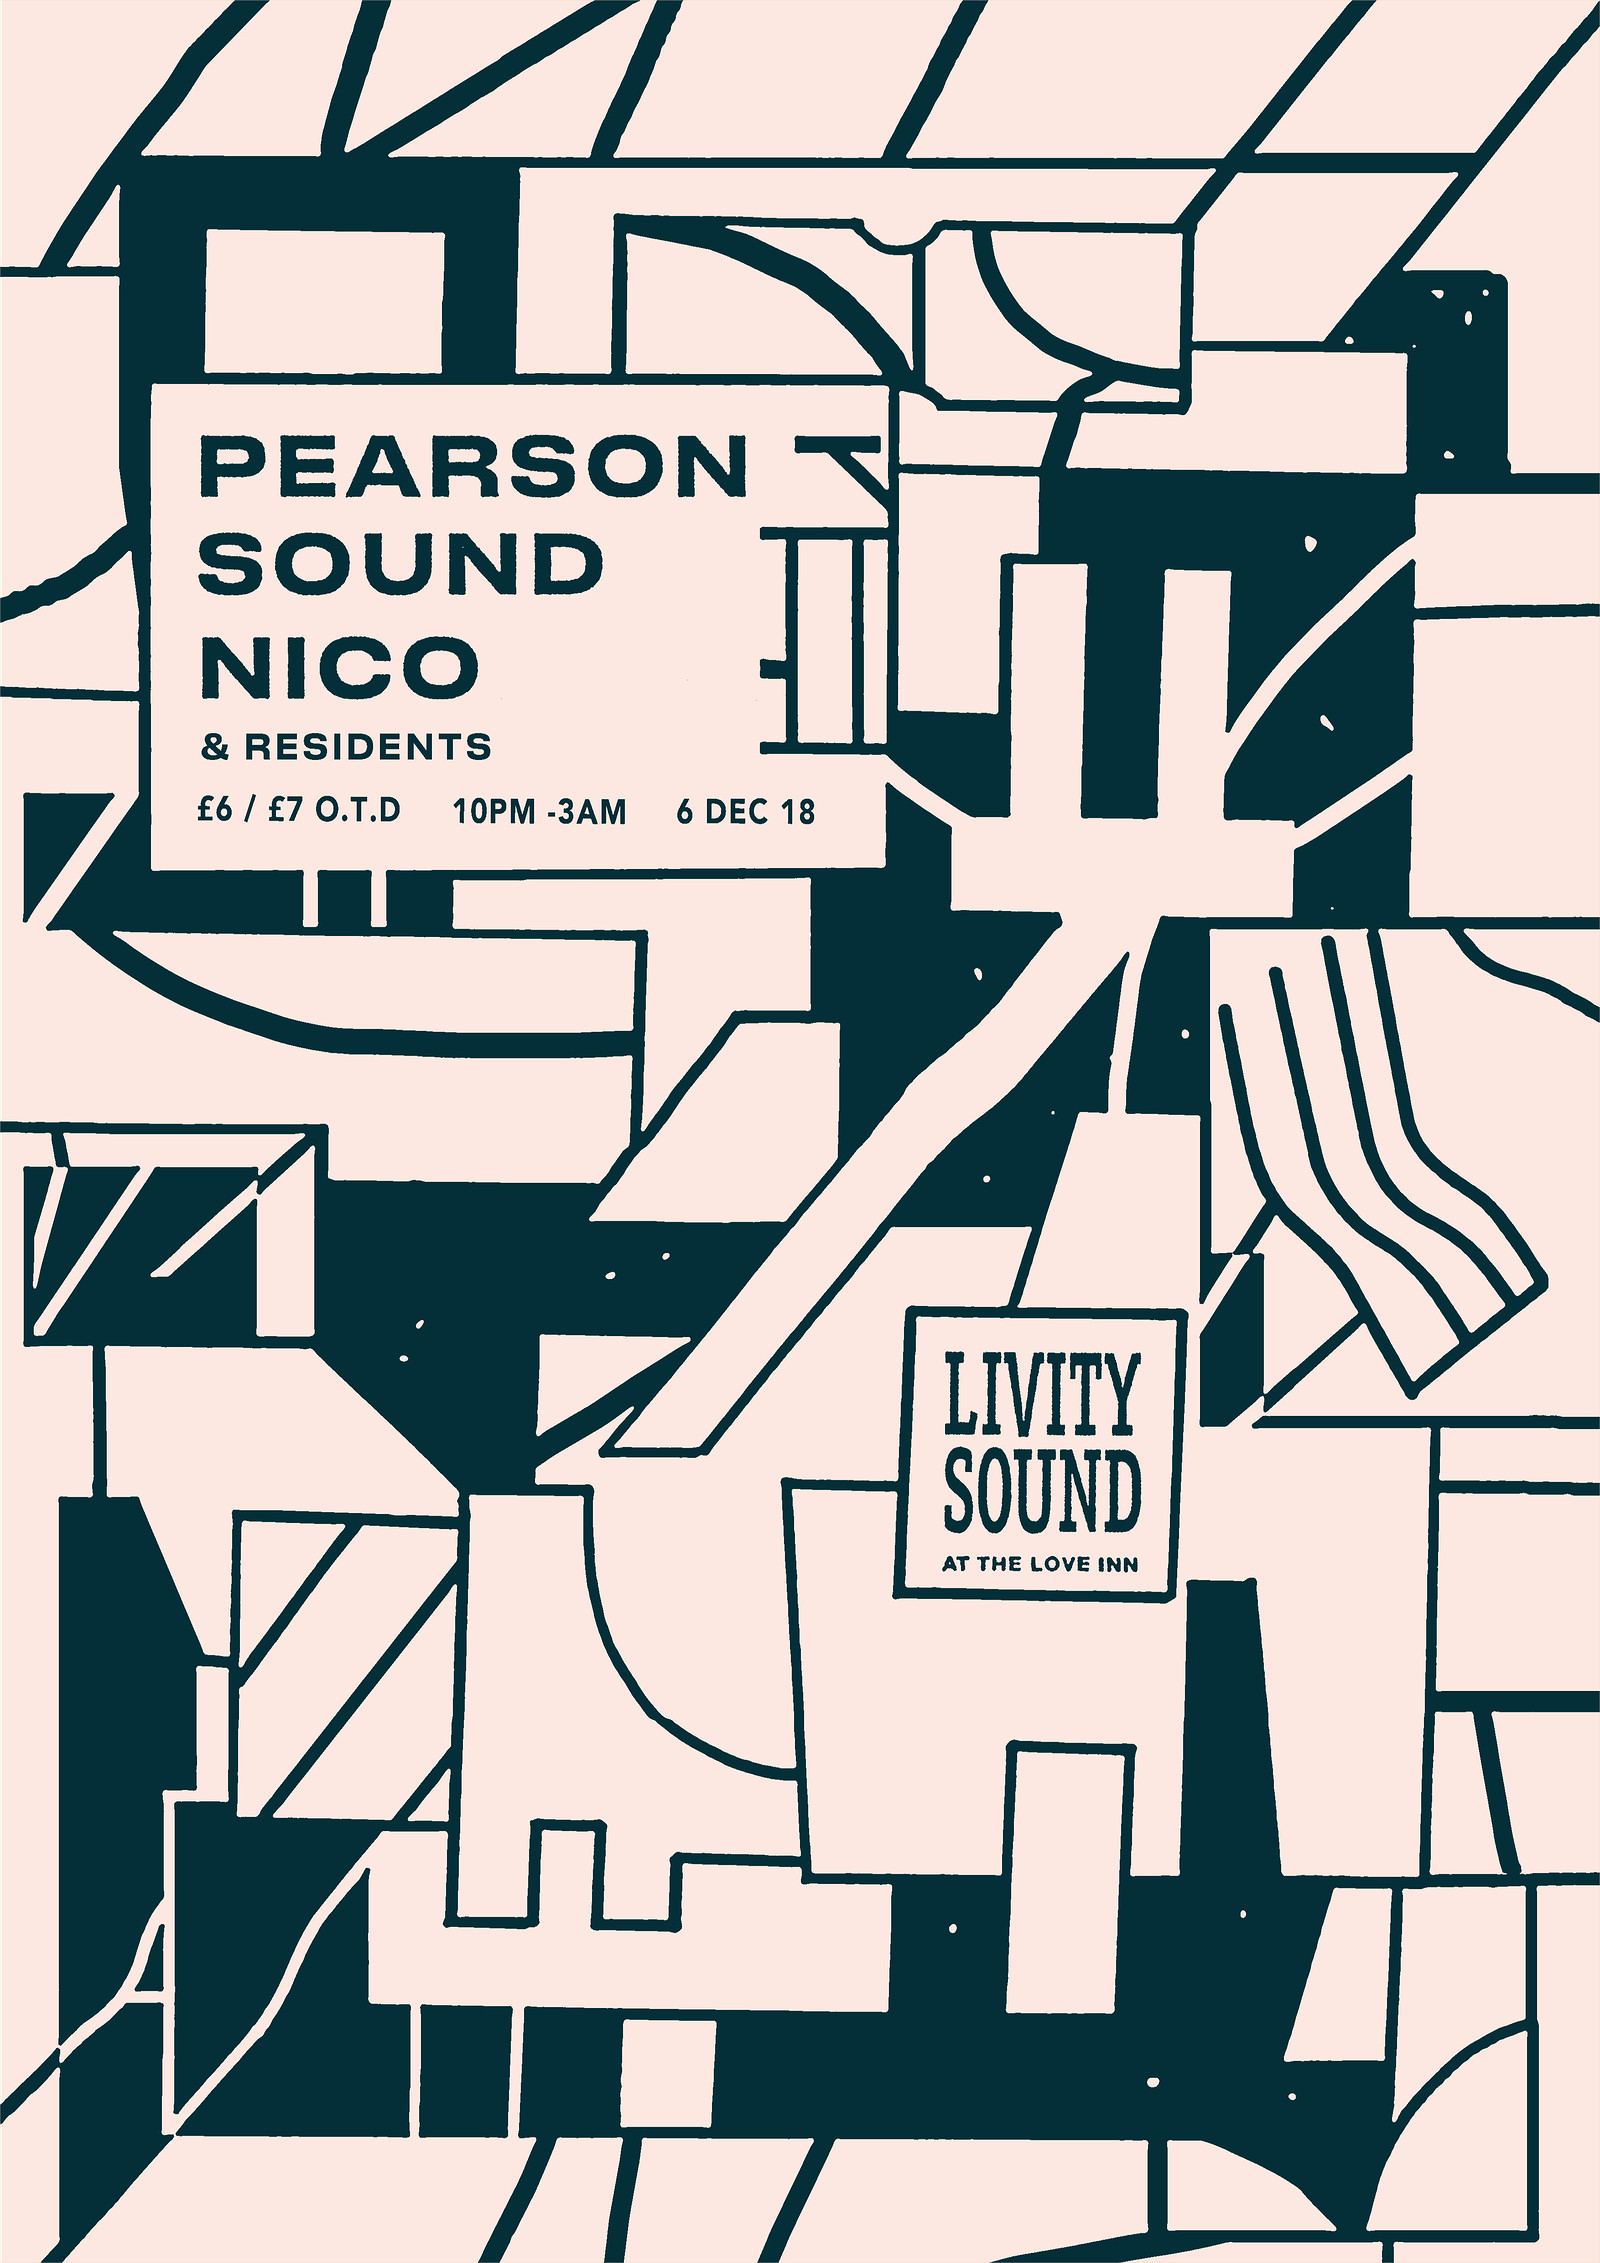 Livity Sound w/ Pearson Sound, Nico & Residents at The Love Inn